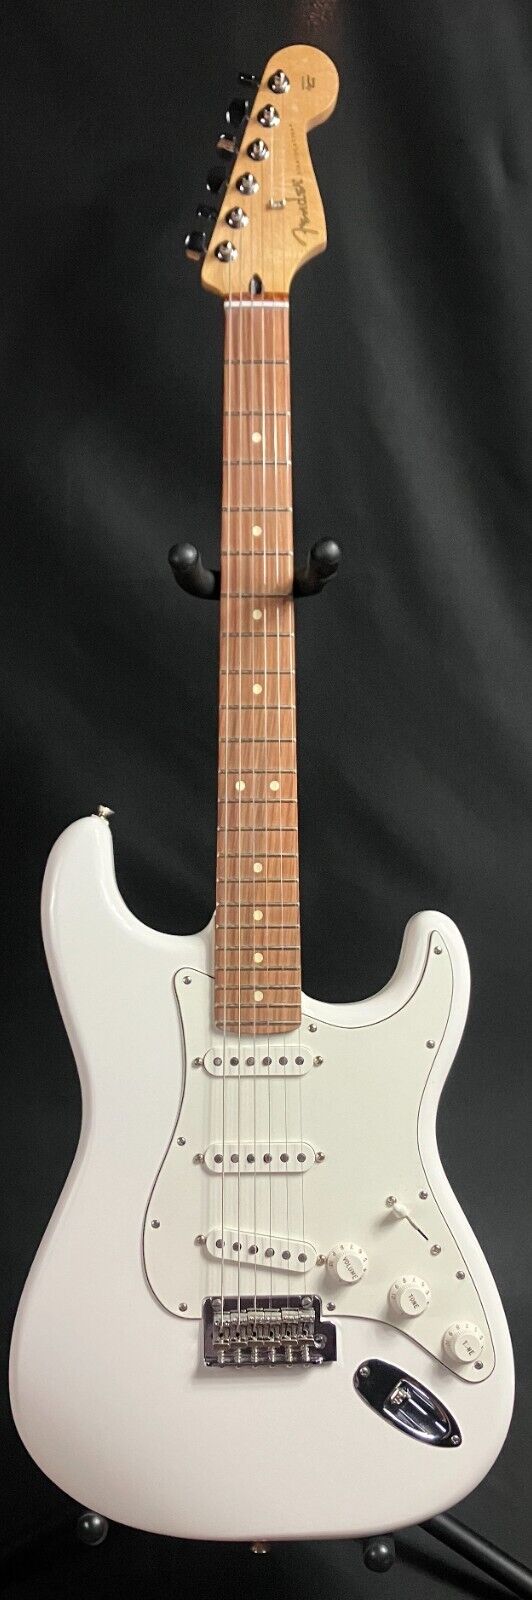 Fender Player Stratocaster Electric Guitar Polar White Finish (846)